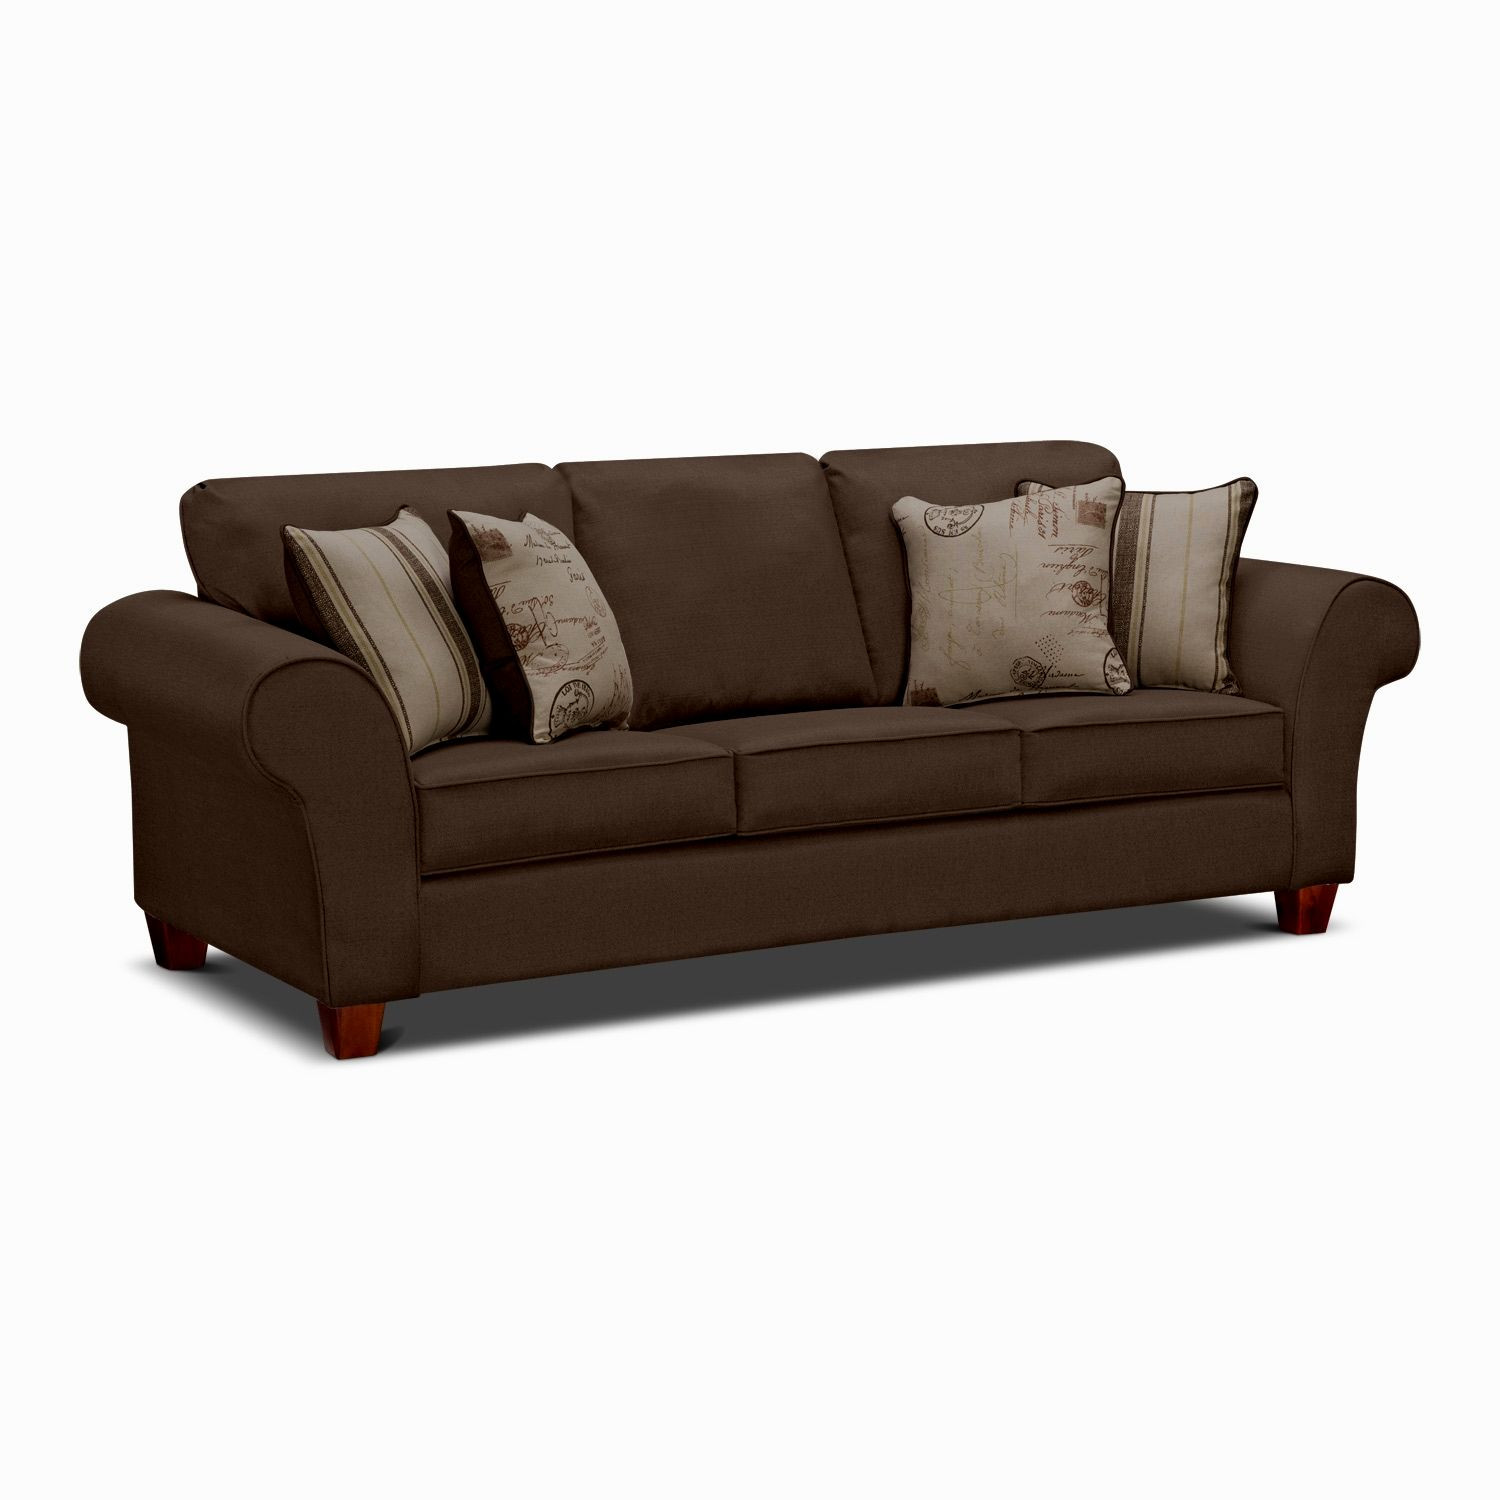 Best ideas about Cheap Sleeper Sofa
. Save or Pin Top Cheap Sleeper sofas Plan Modern Sofa Design Ideas Now.